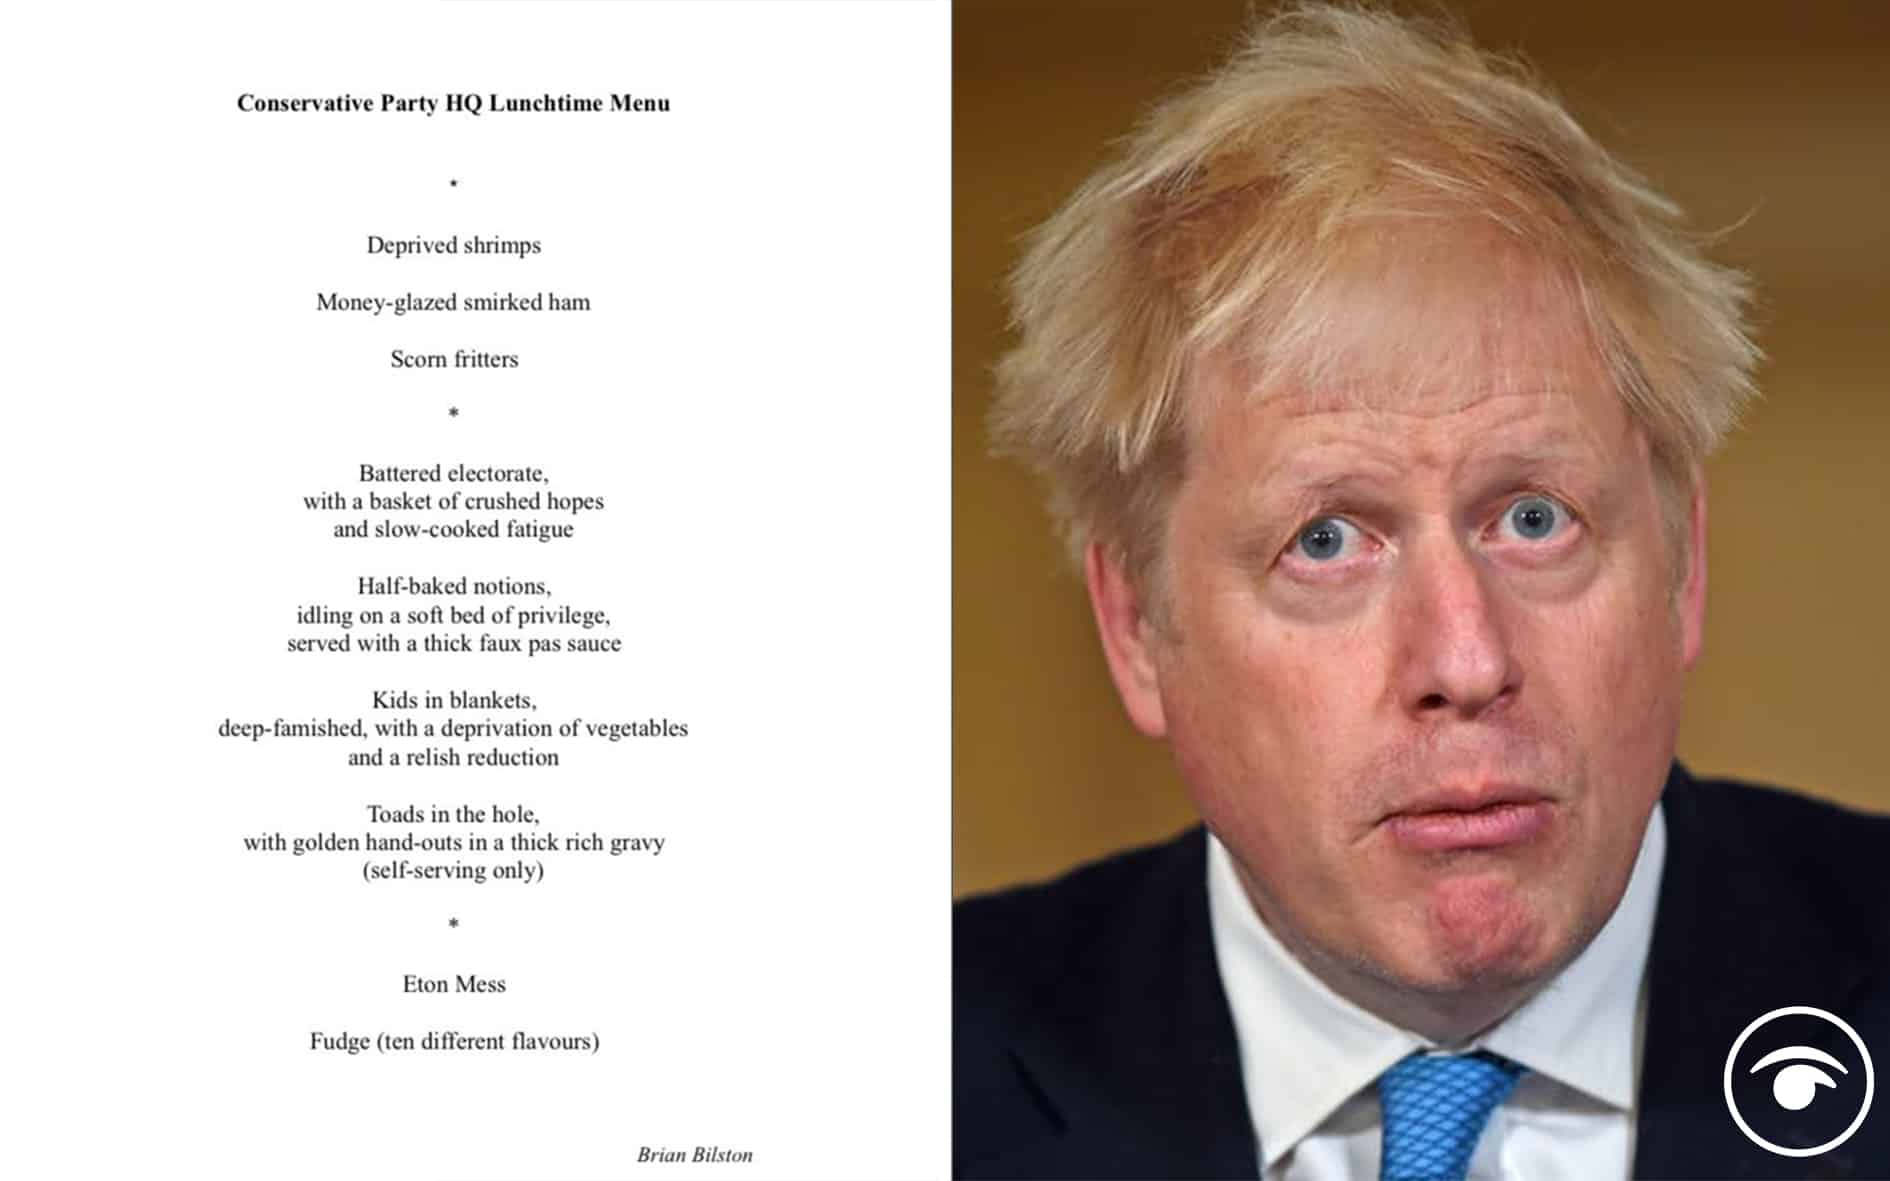 Mock Tory HQ lunch menu includes “deprived shrimps” and “battered electorate”